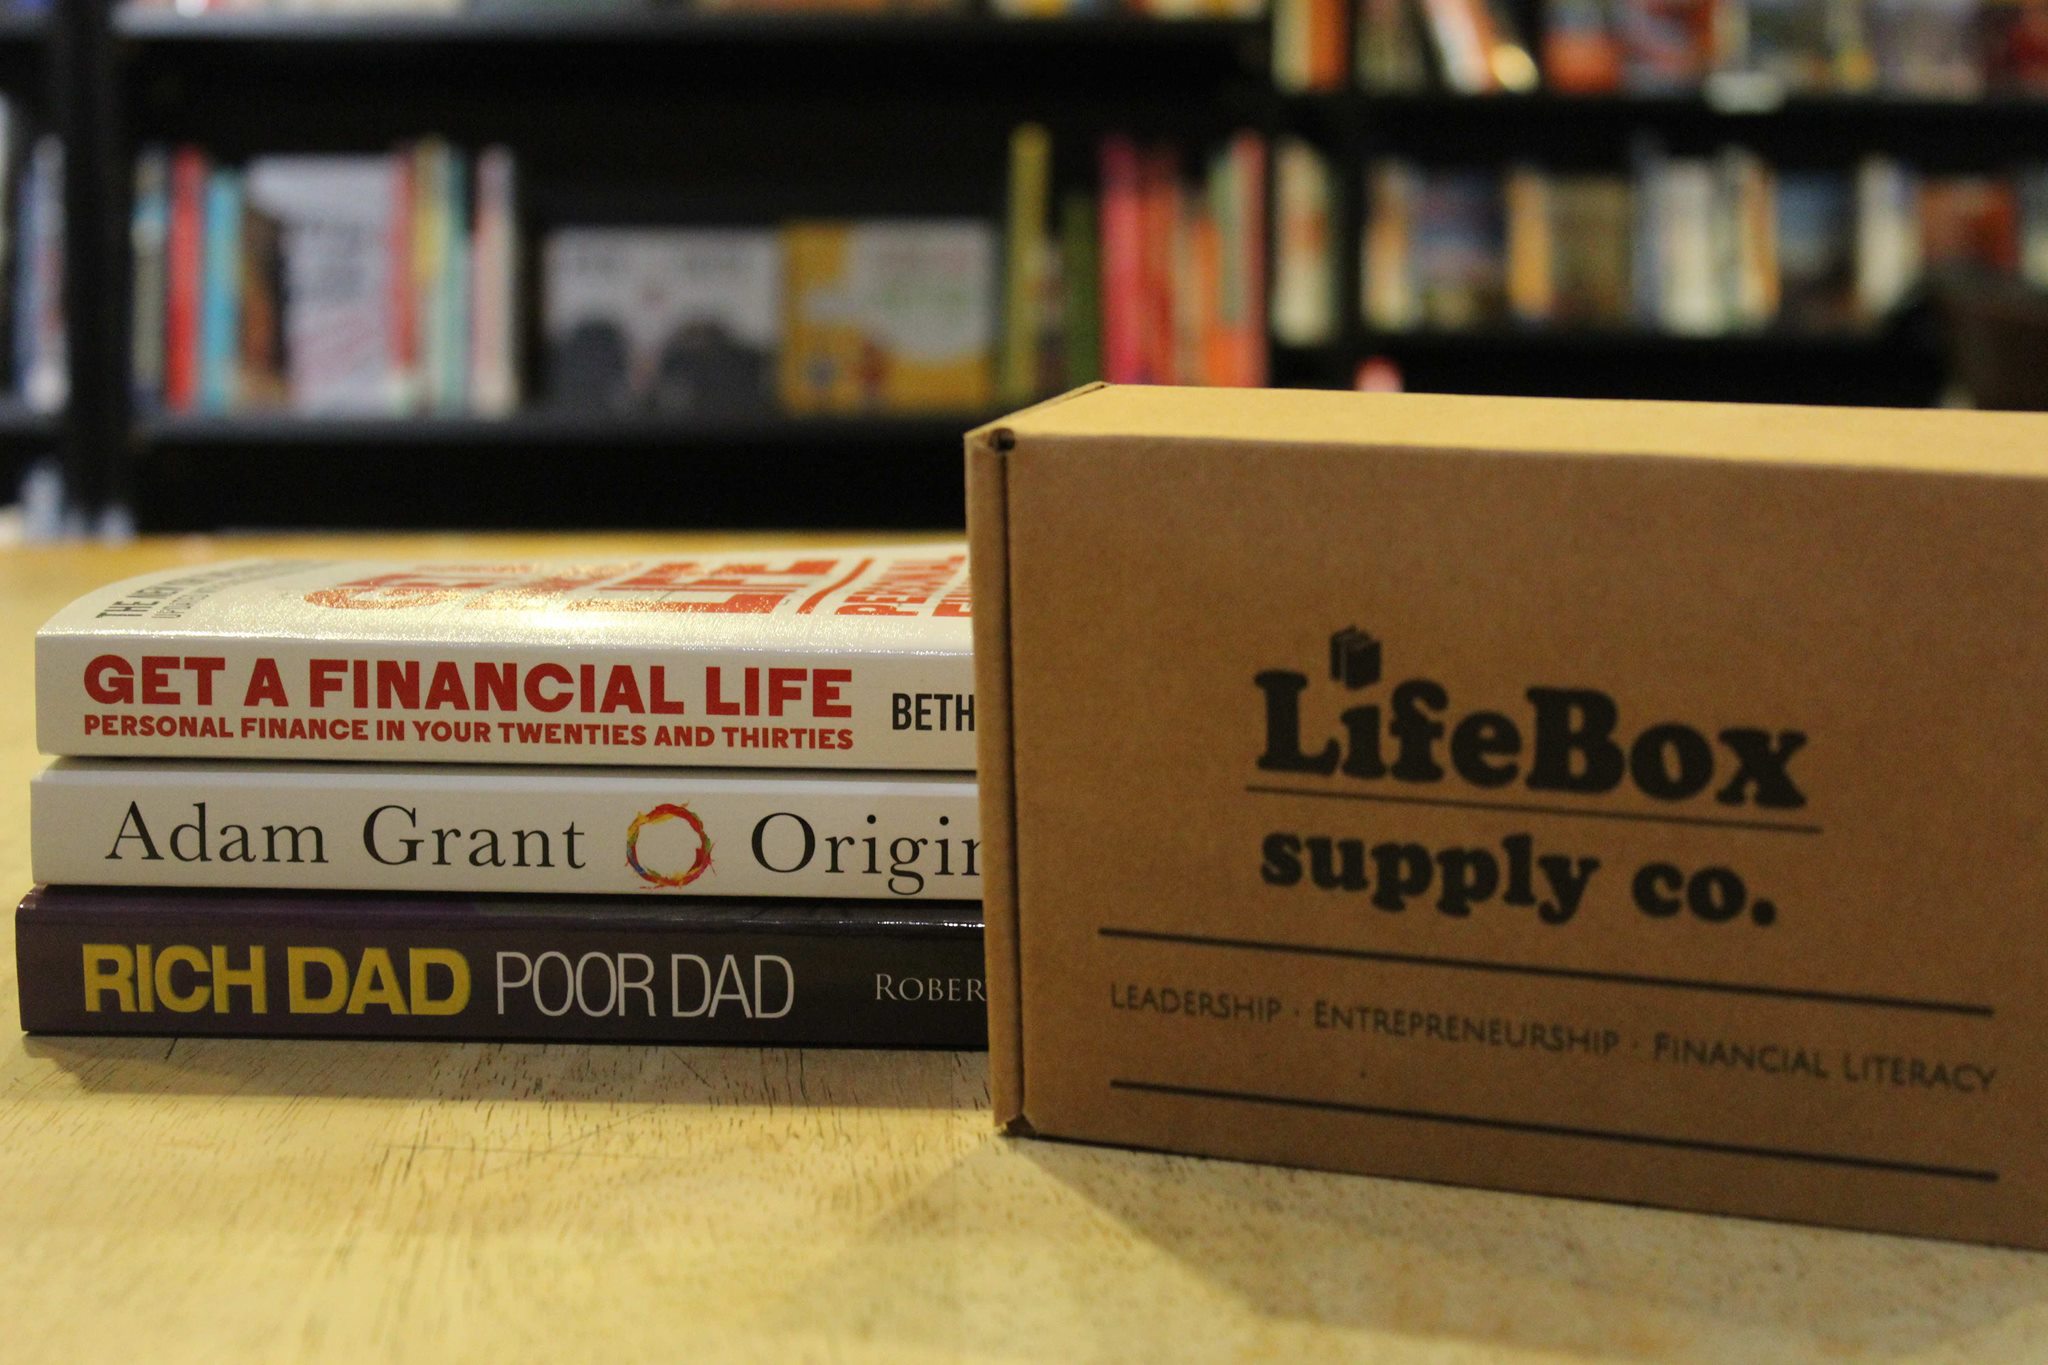 LifeBox Supply Company